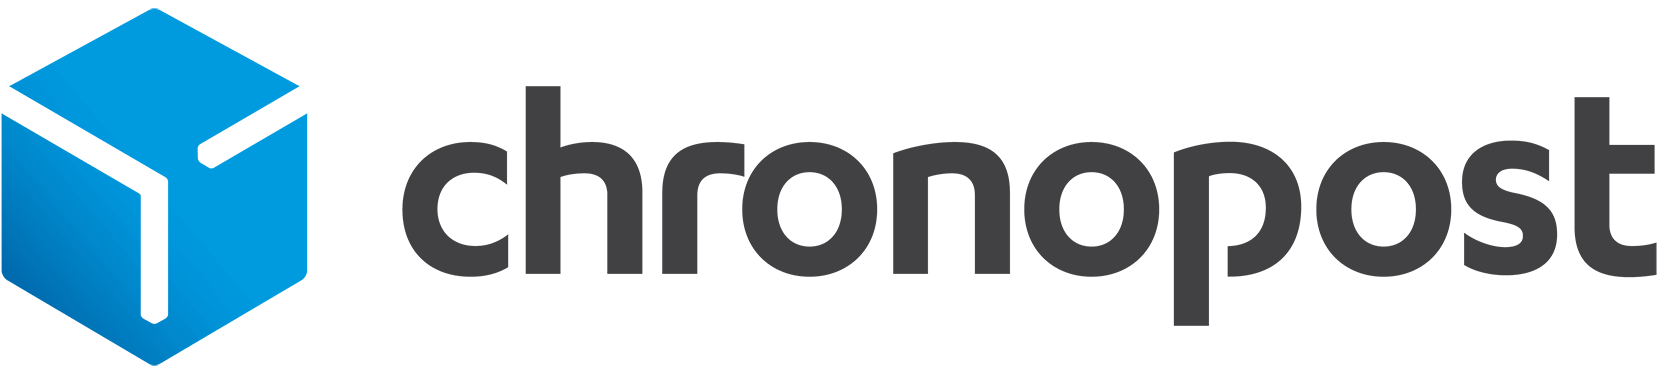 Chronopost_logo_2015.png